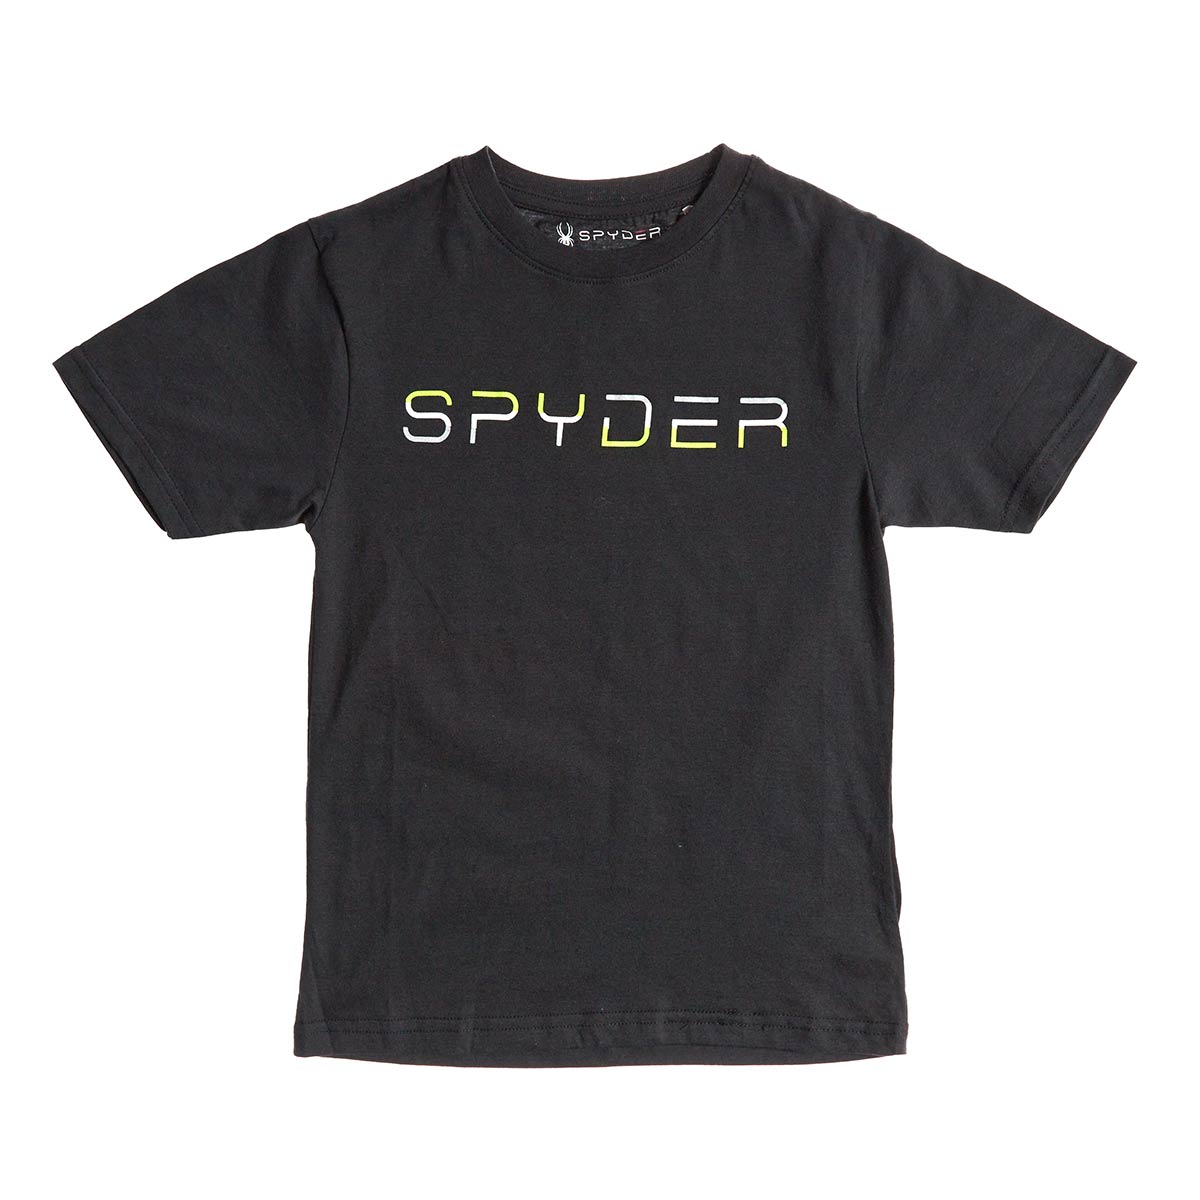 Spyder Boy's Web First Layer Shirt - Volcano Black 